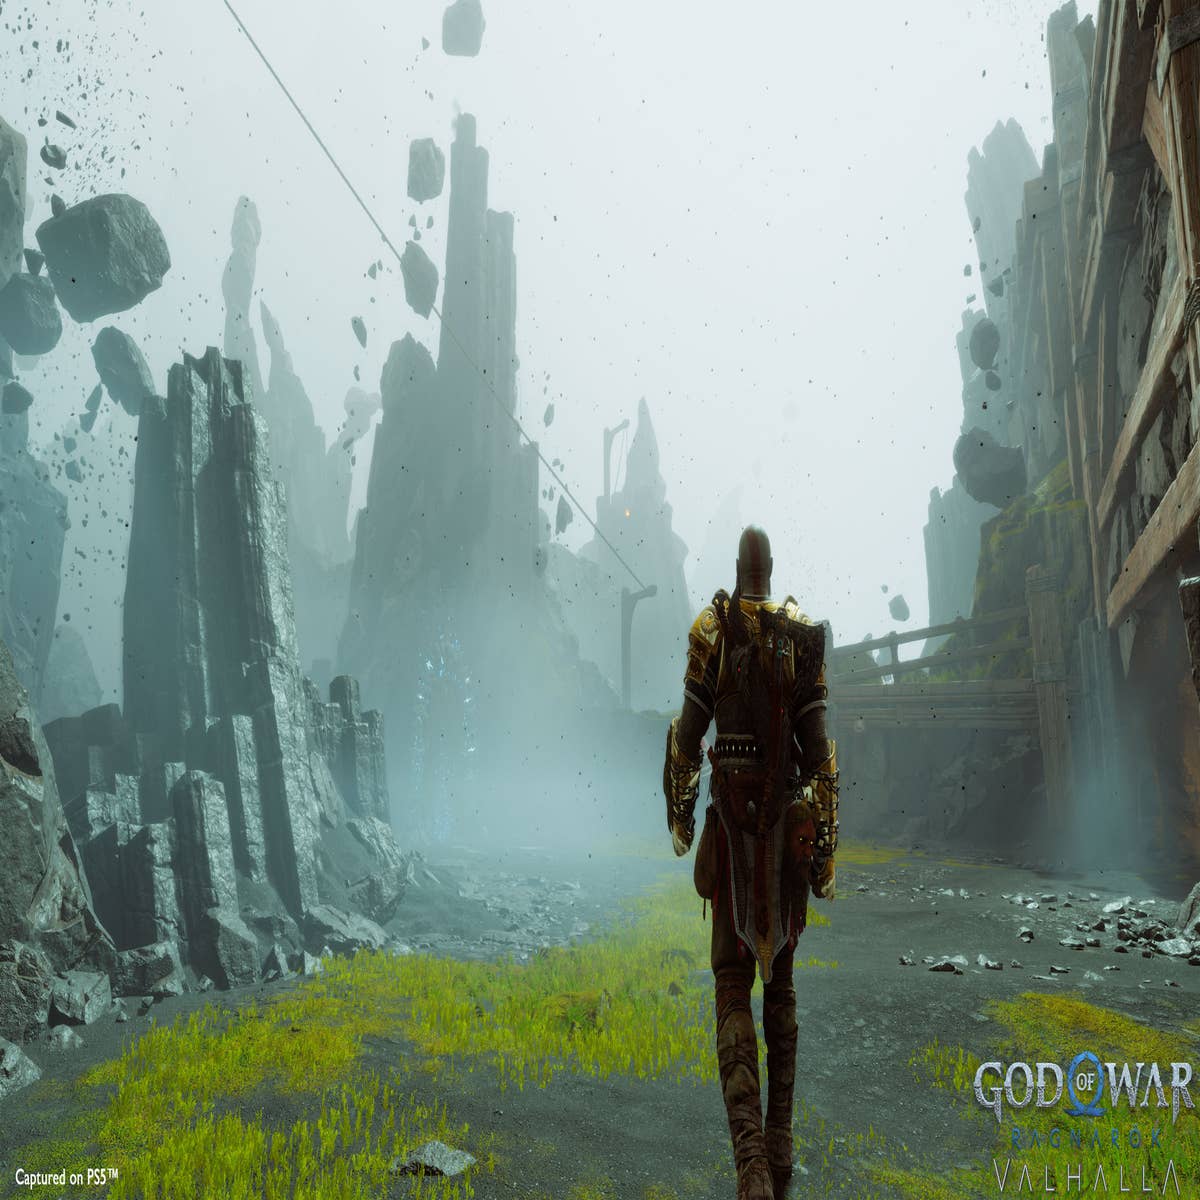 God of War Ragnarok Valhalla Release Date, Gameplay, and Trailer - News